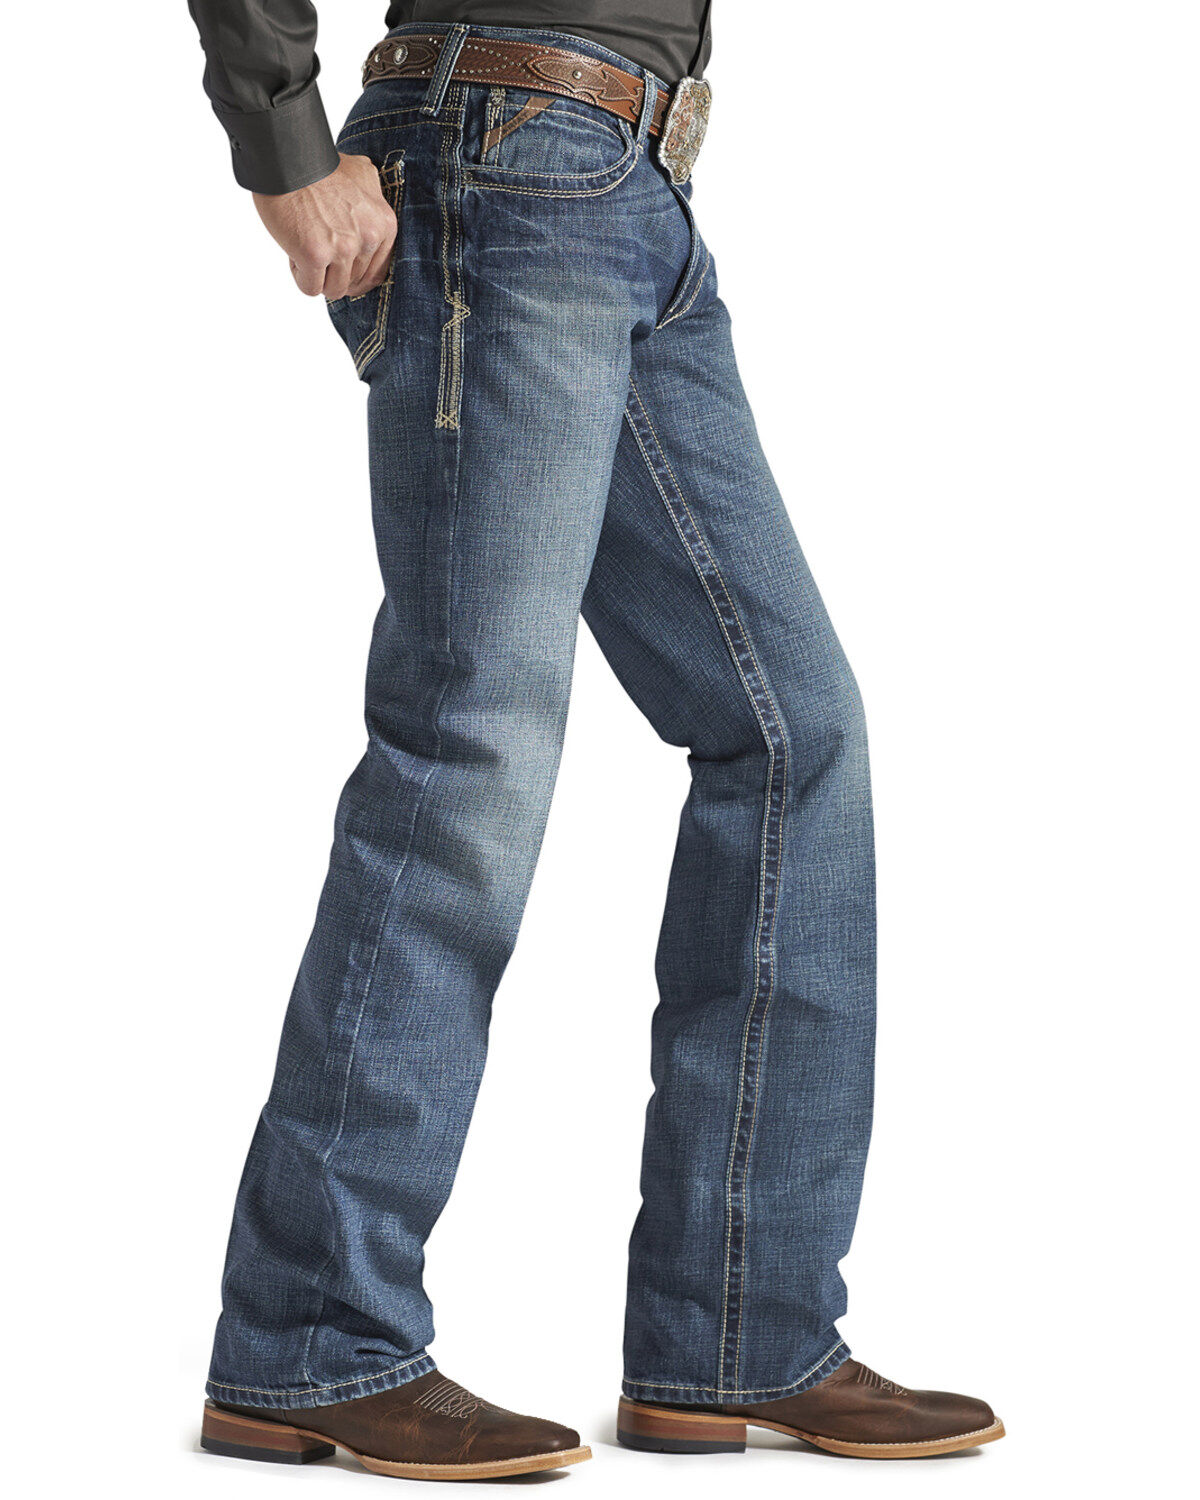 38 waist jeans